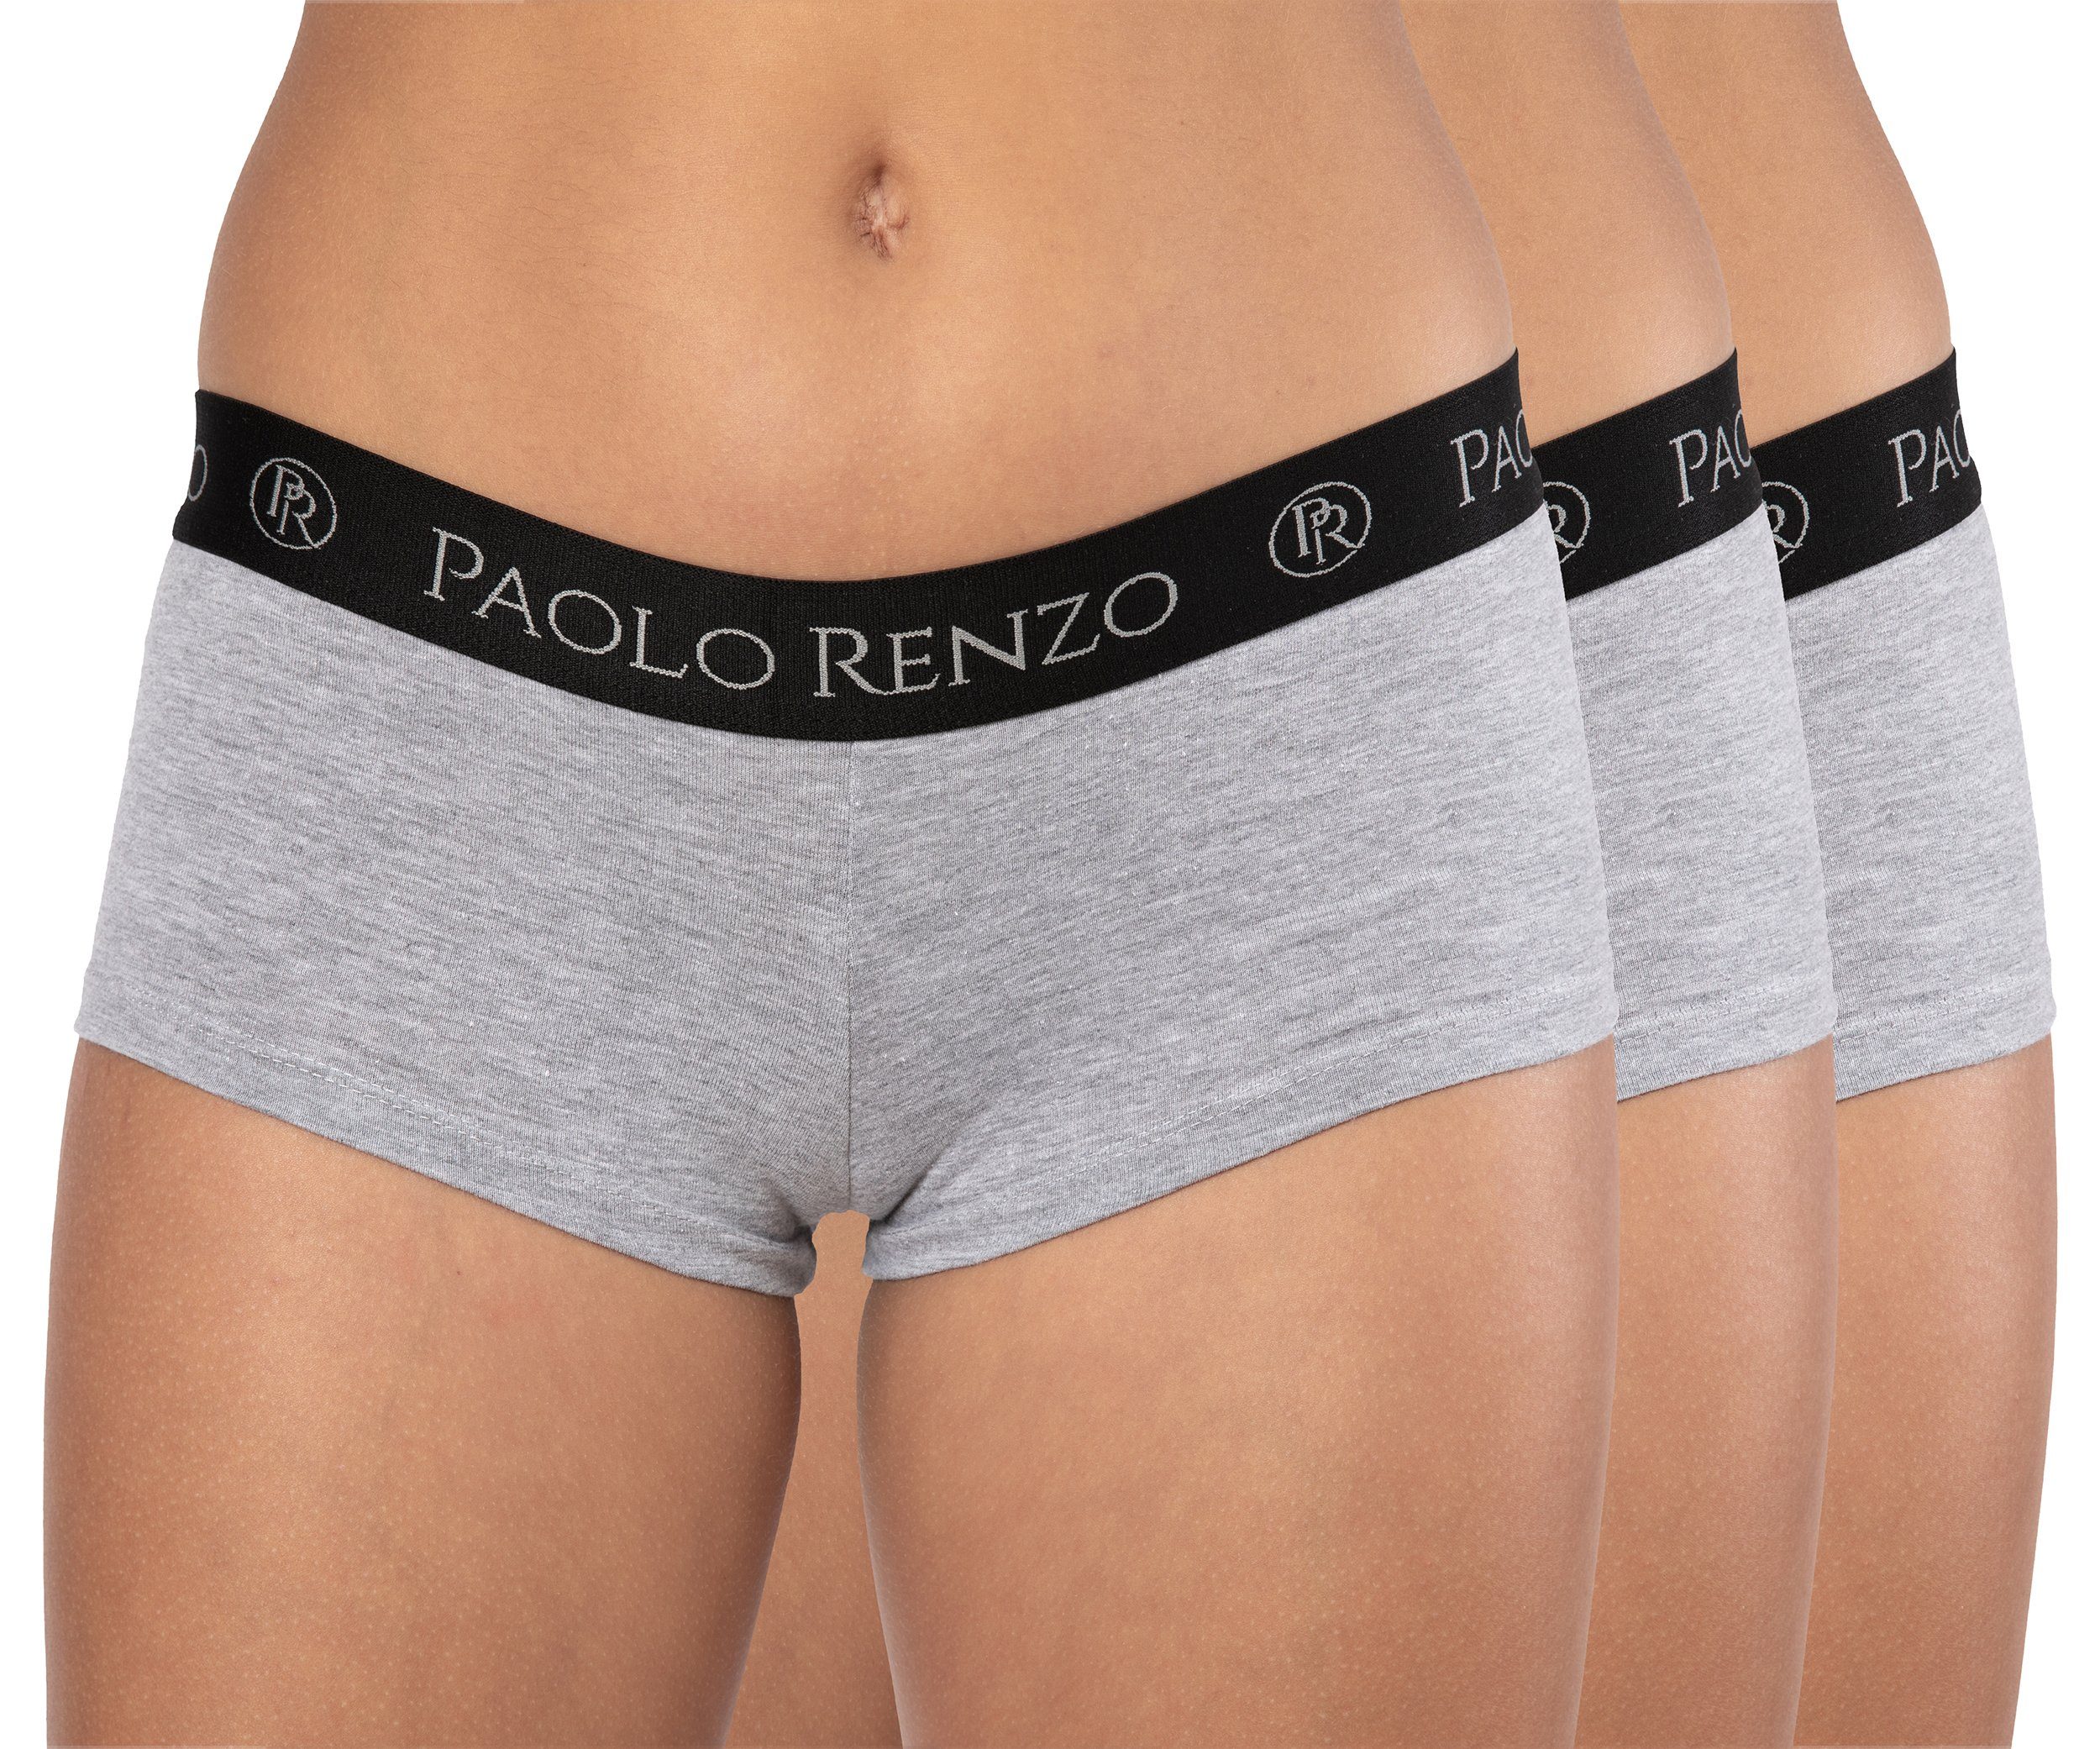 Sport Panty Baumwolle Damen & Panty Hautsympatische aus Panty Renzo Atmungsaktive Sports-Collection hochwertiger Paolo (3-St)